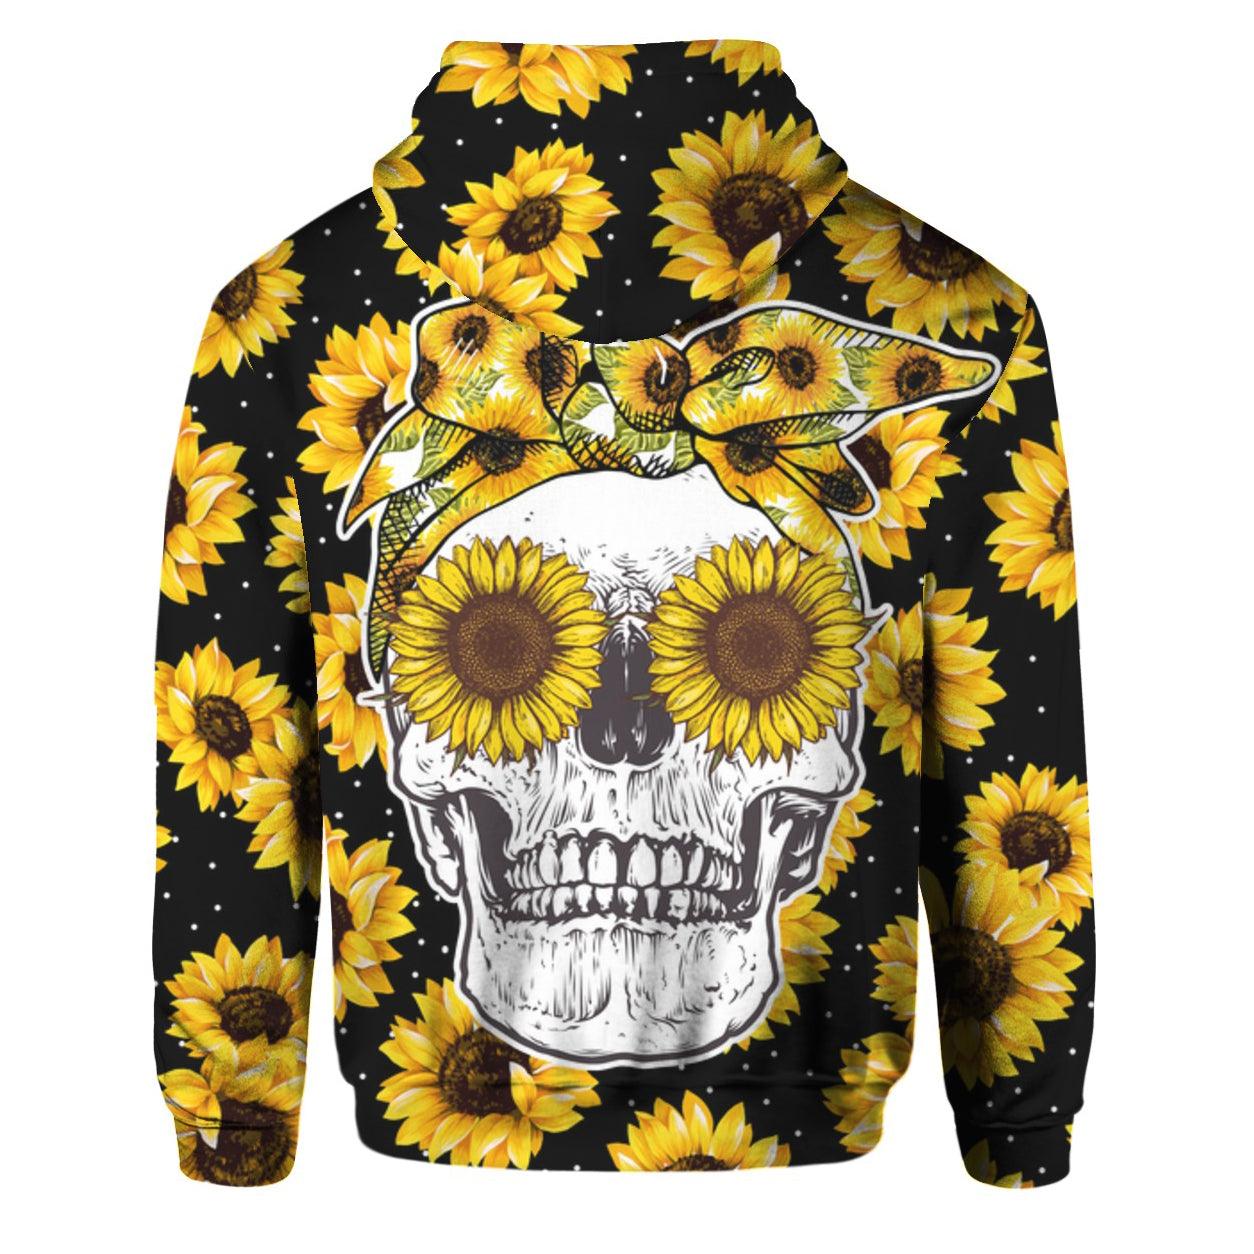 Sunflower Skull Head All Over Print Unisex Pullover Hoodie, Stunning Black Yellow Patter Daily Wear - Wonder Skull